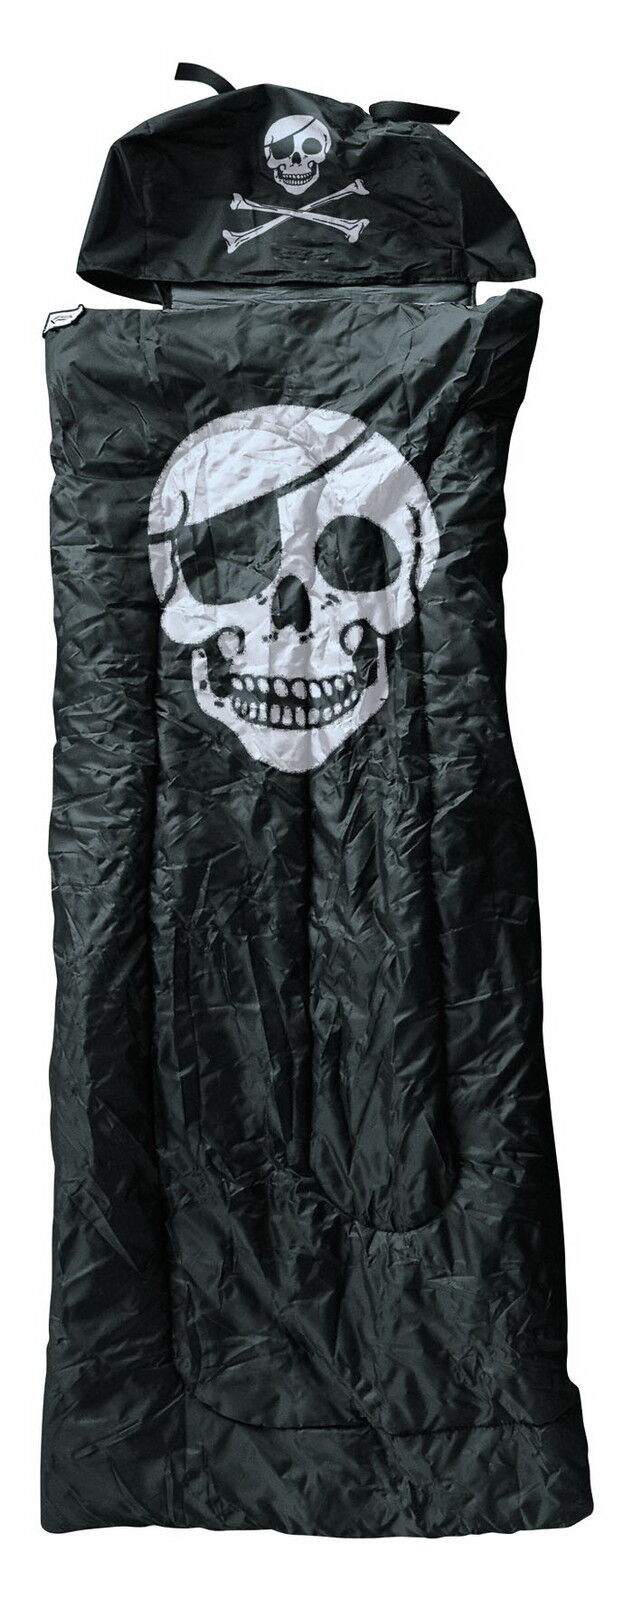 Pilot Sleeping Bag Black With Jolly Roger Print Skull Camping Outdoor